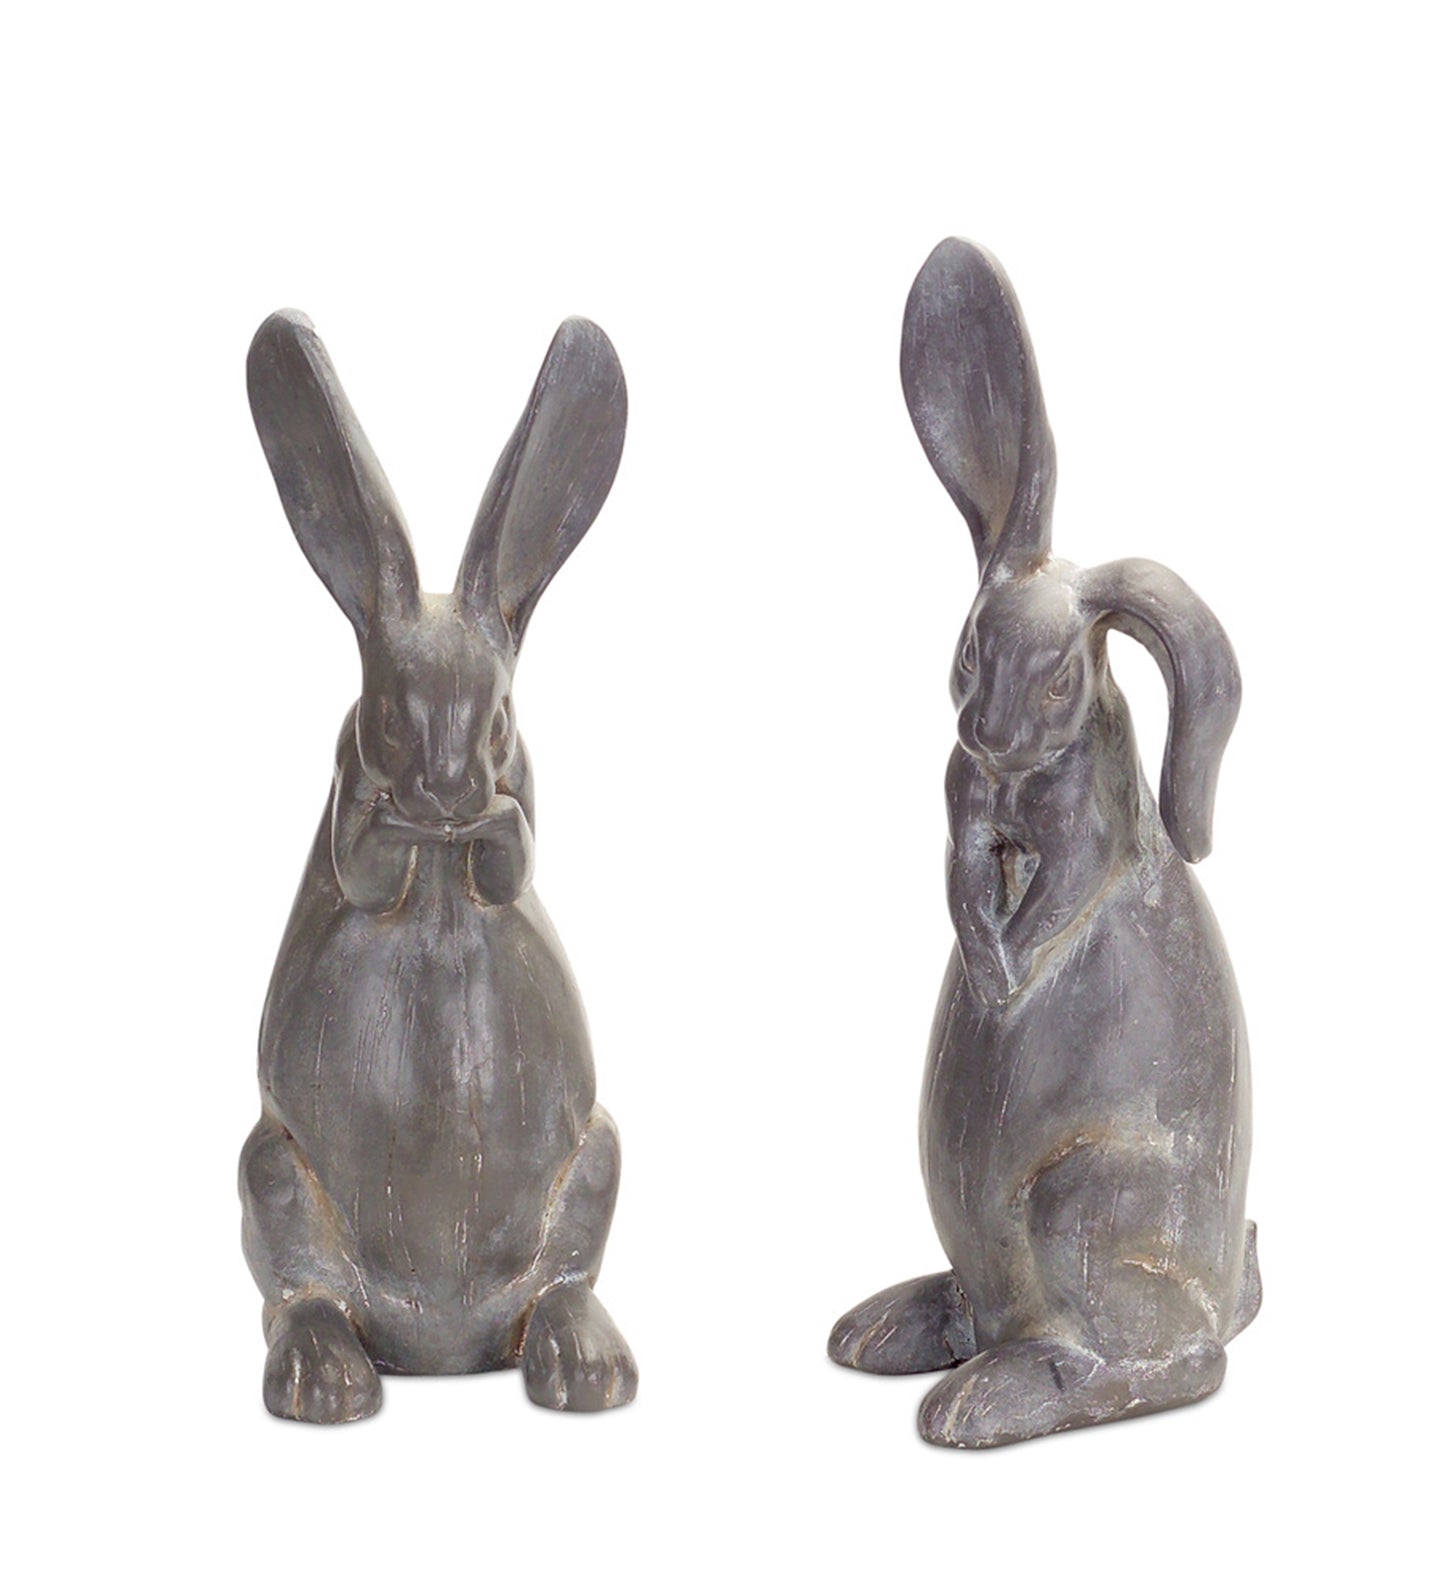 Long Ear Stone Rabbit Garden Statue (Set of 2)